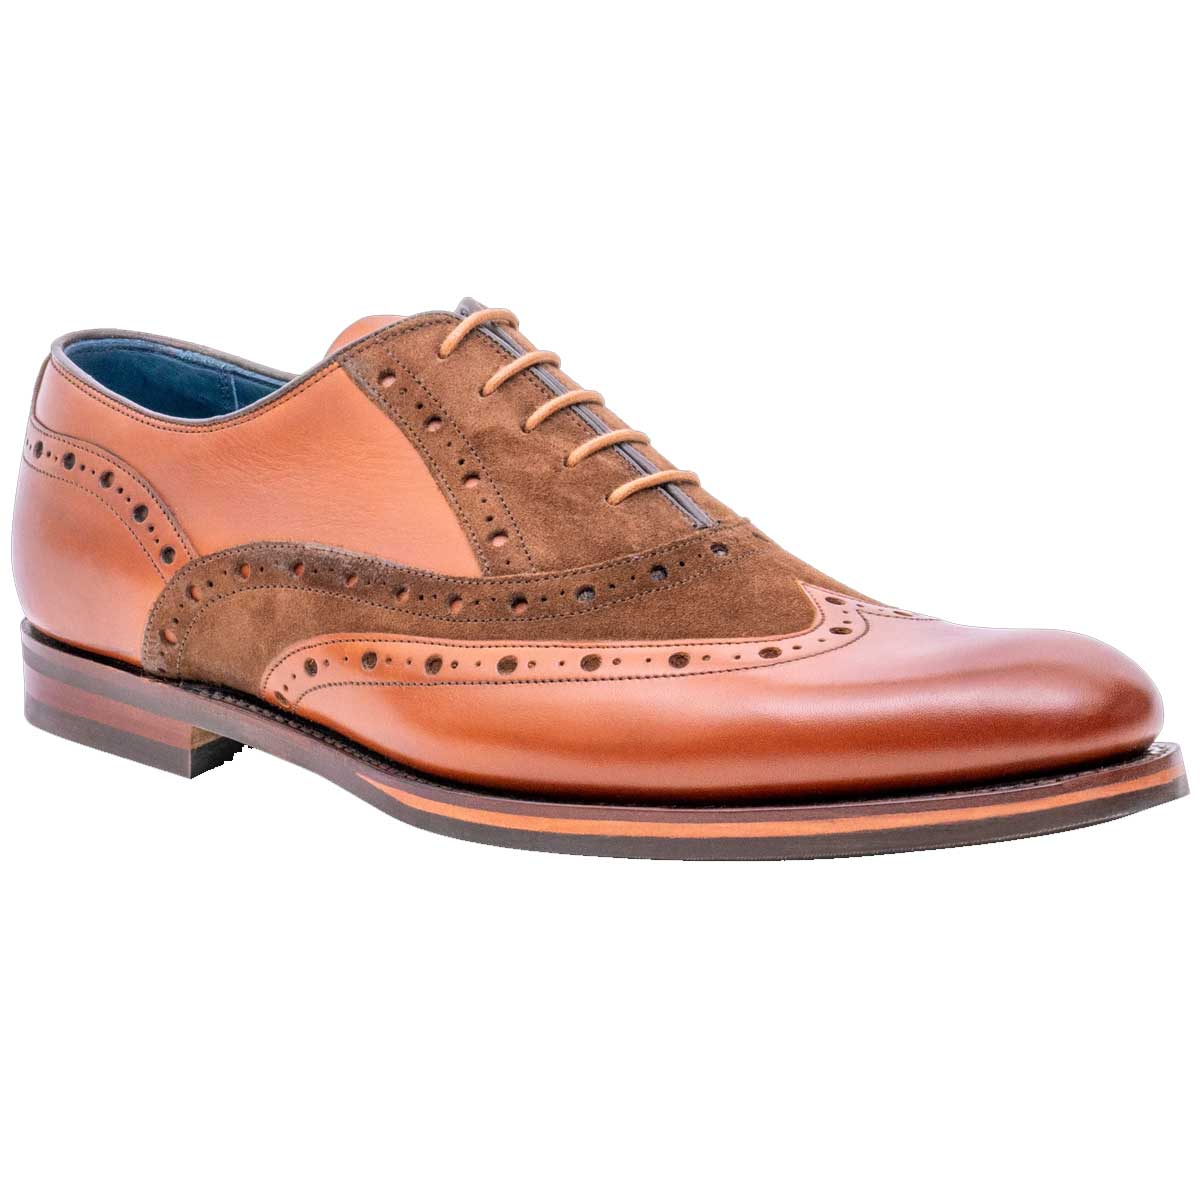 BARKER Abingdon Shoes - Mens - Chestnut Calf/Polo Suede